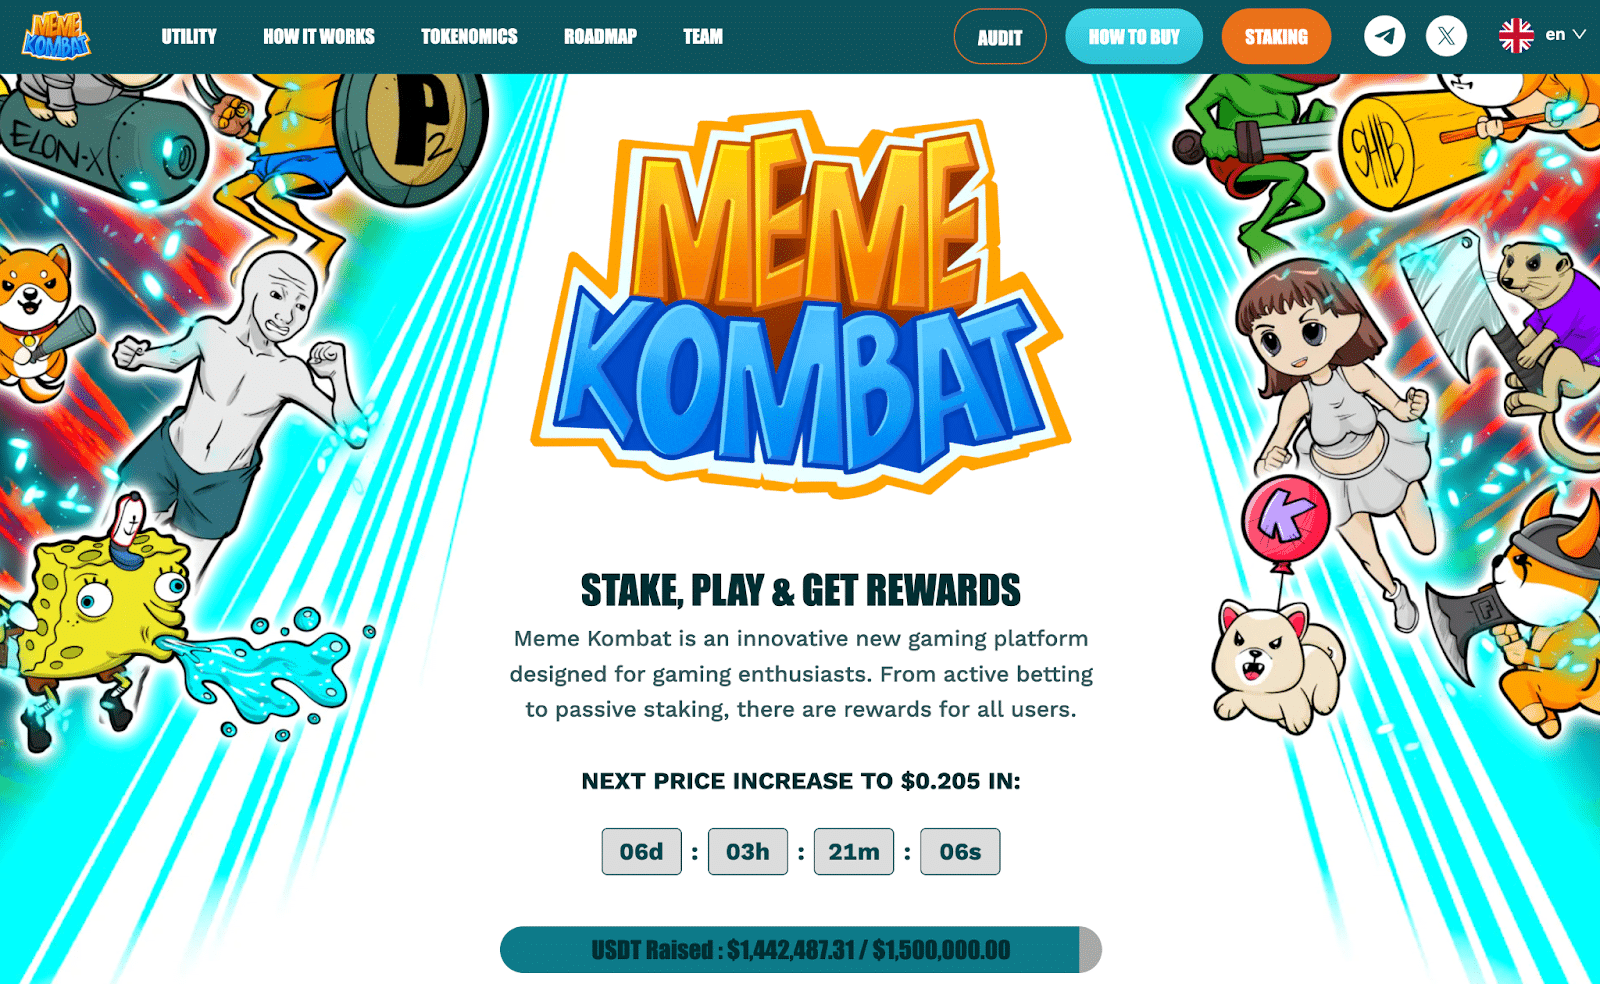 Pepepe币价格上涨25%Meme Kombat在独特的游戏平台上筹集了近150万美元　也许会有100倍的增加